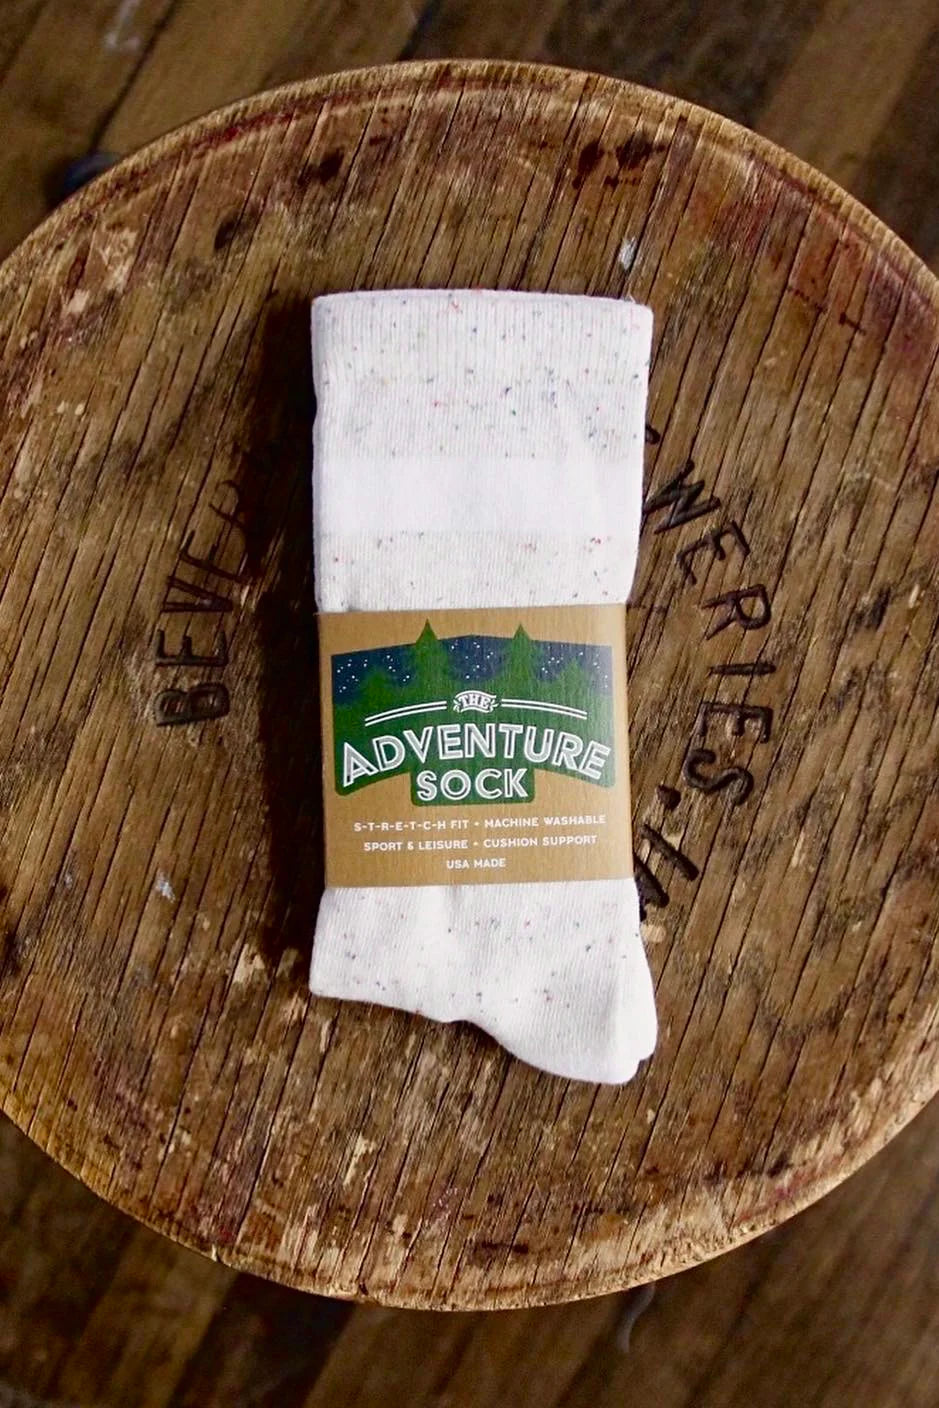 Upstate Stock | The Adventure Sock